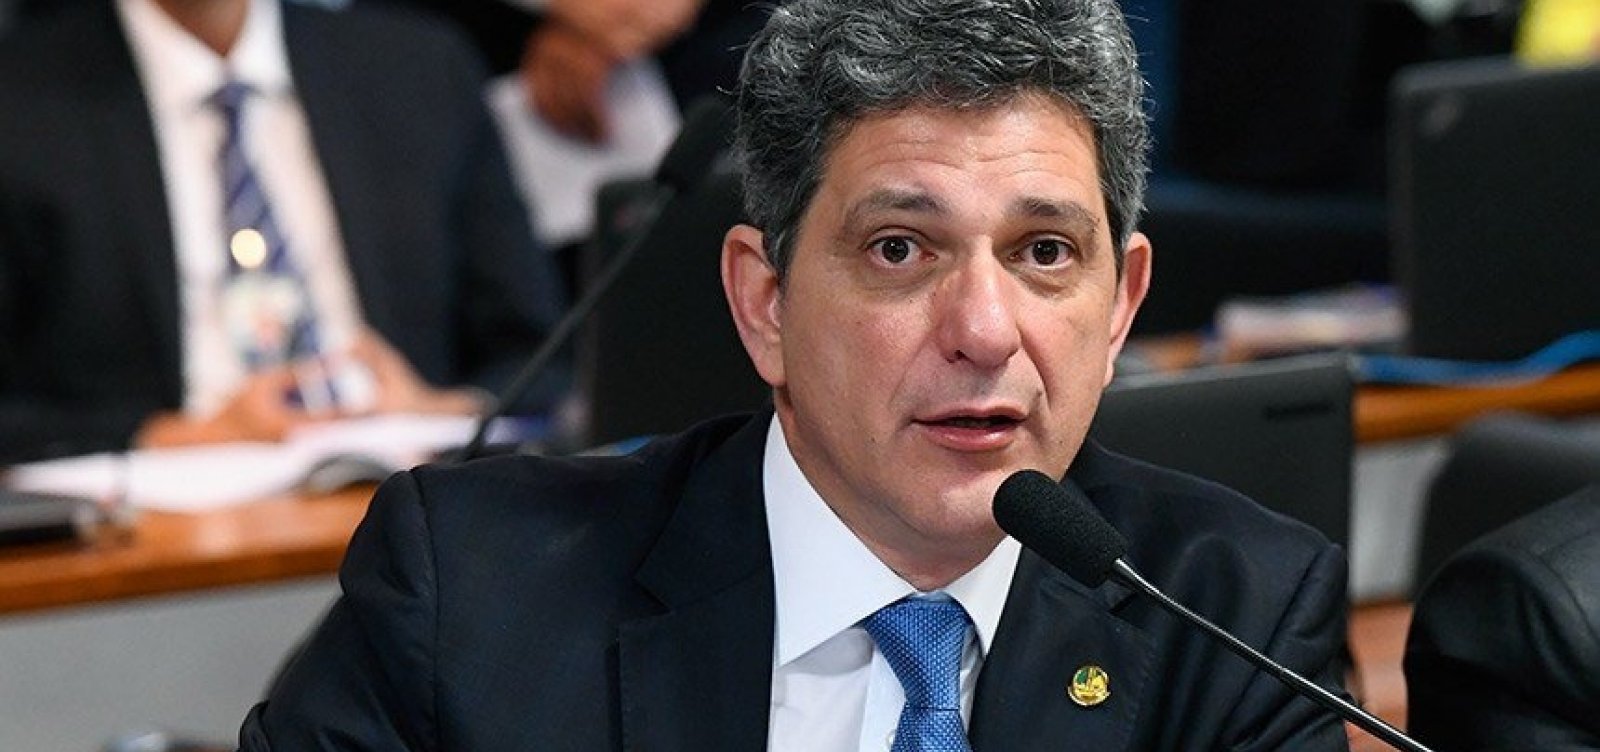 Senador de Sergipe diz que apoiaria candidatura de Rui Costa a presidente da República